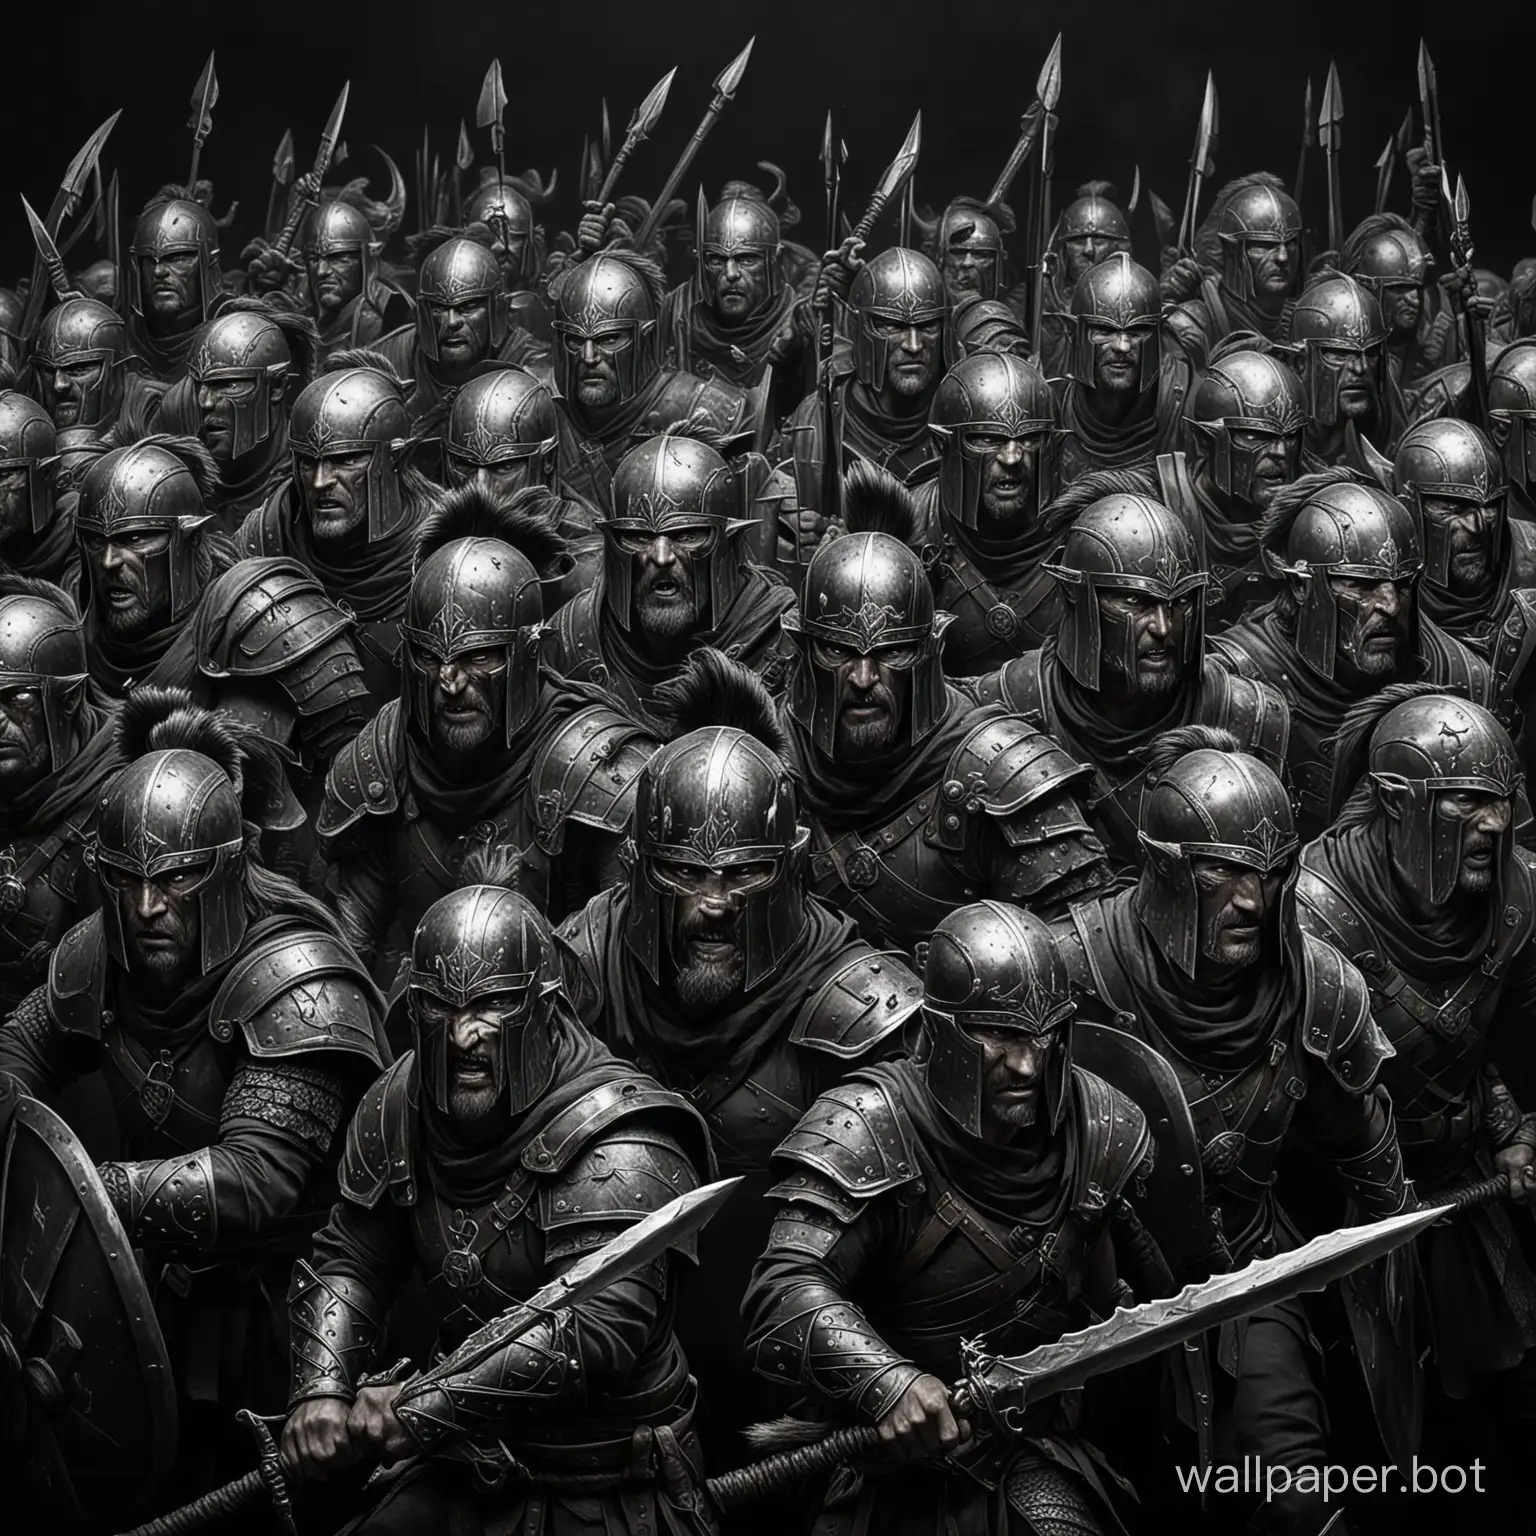 Draw a fantasy warriors army on a black background